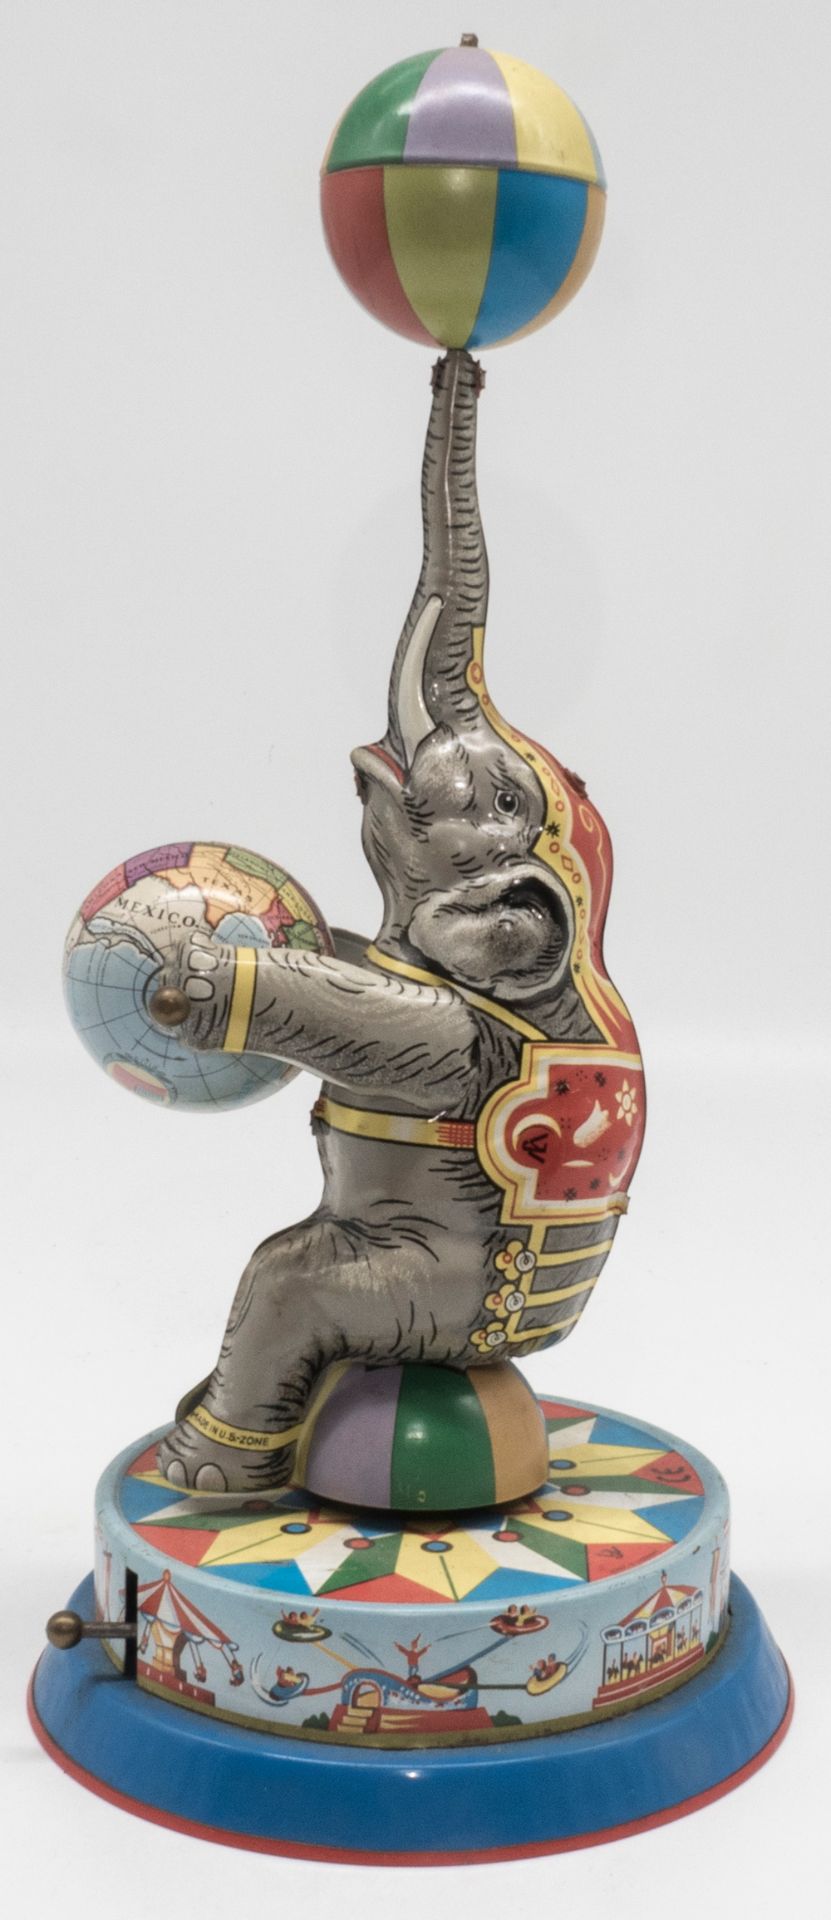 Josef Wagner, Elefant mit Globus. Blech. Ohne Schlüssel. Made in U.S. Zone Germany. Höhe: ca. 26